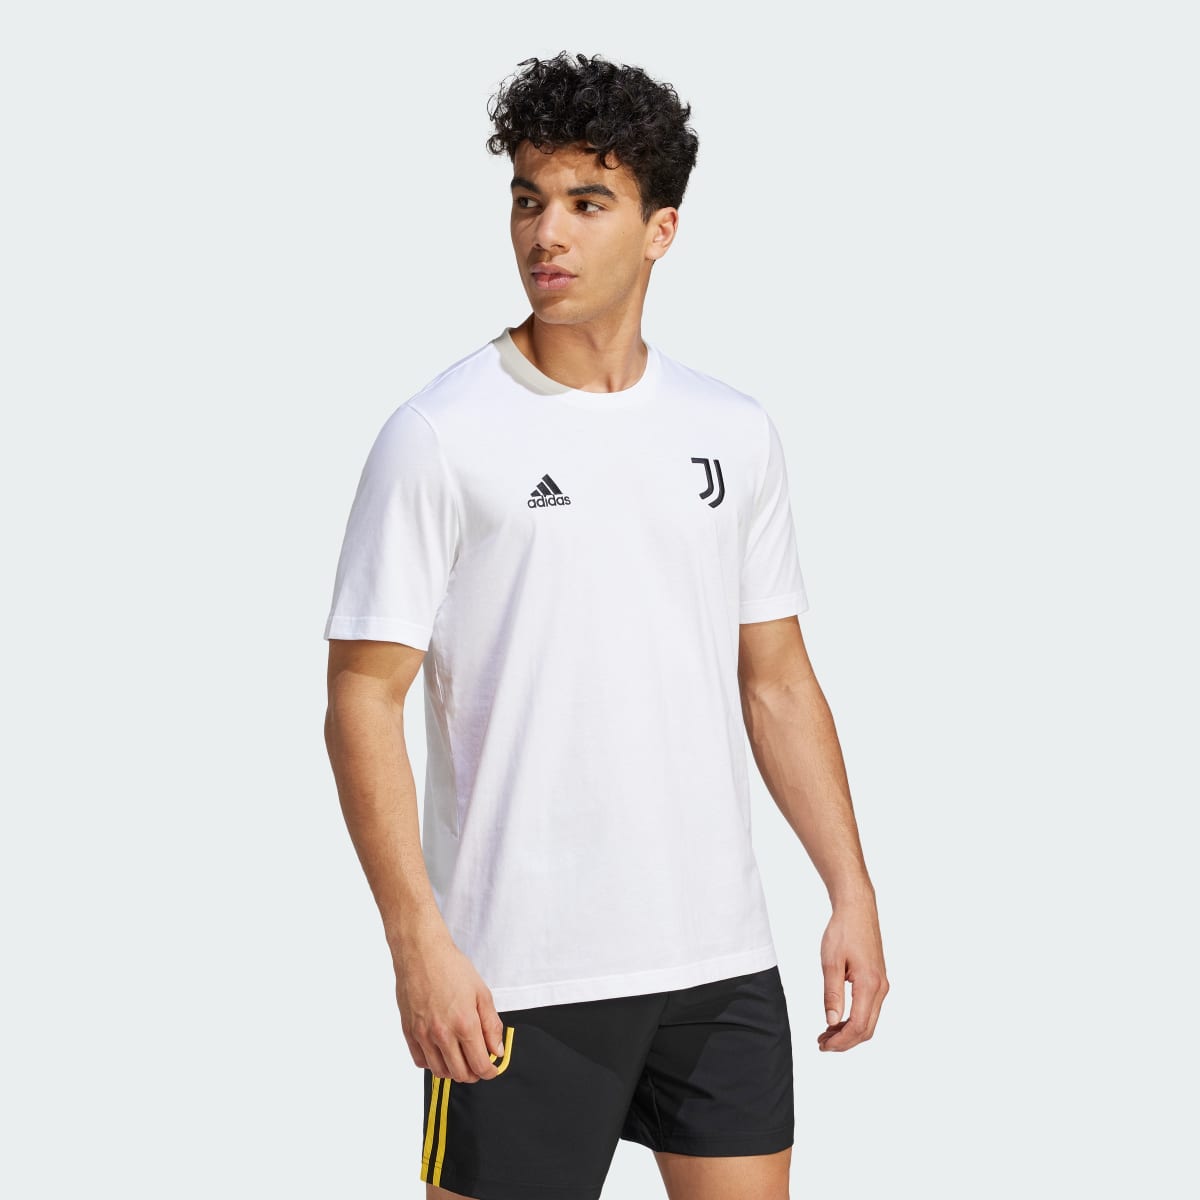 Adidas T-shirt Juventus DNA. 4